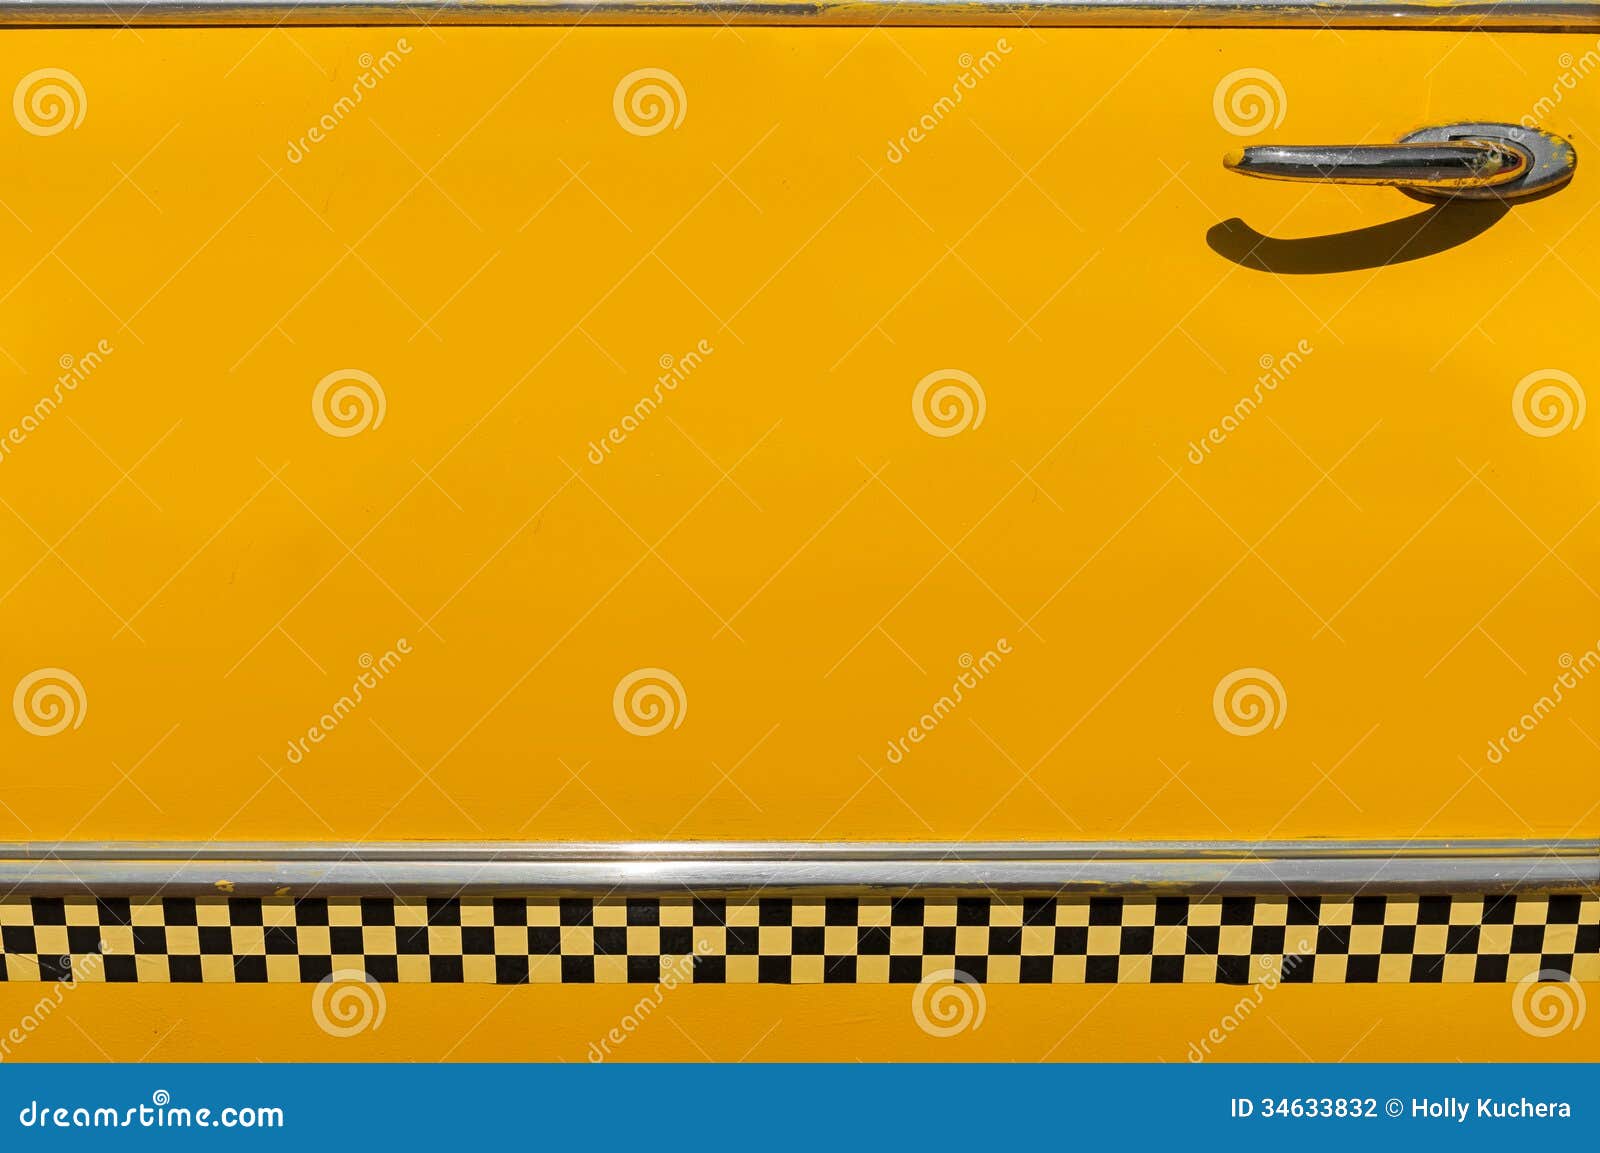 checkered yellow taxi cab door